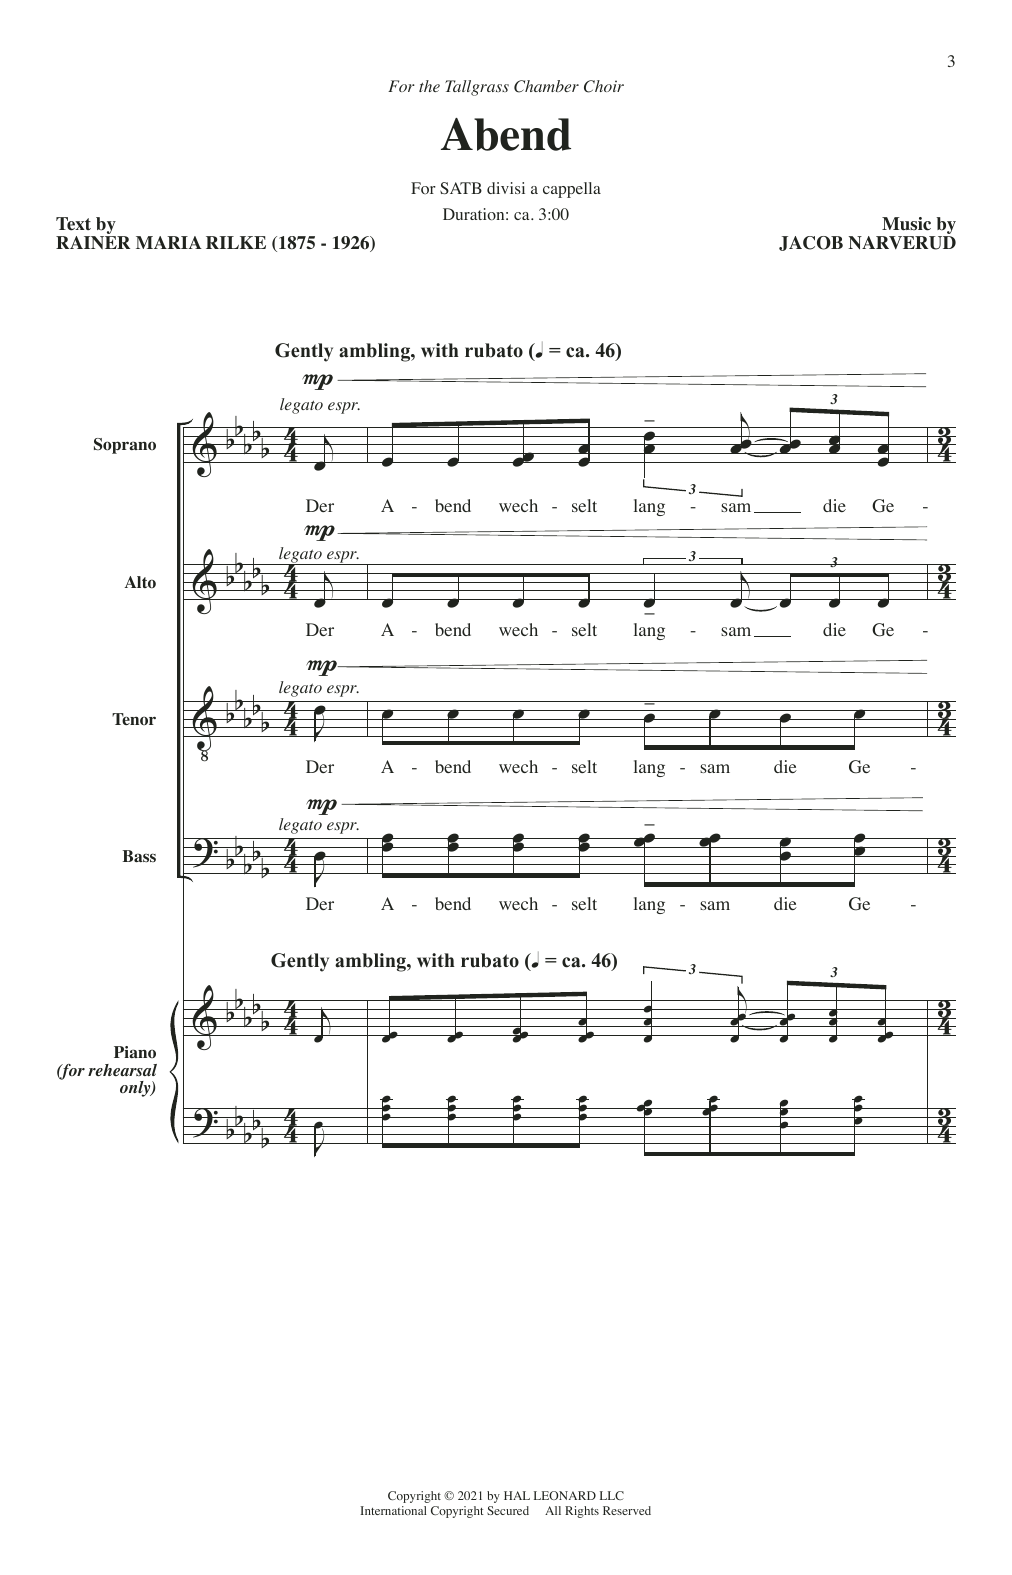 Jacob Narverud Abend Sheet Music Notes & Chords for SATB Choir - Download or Print PDF